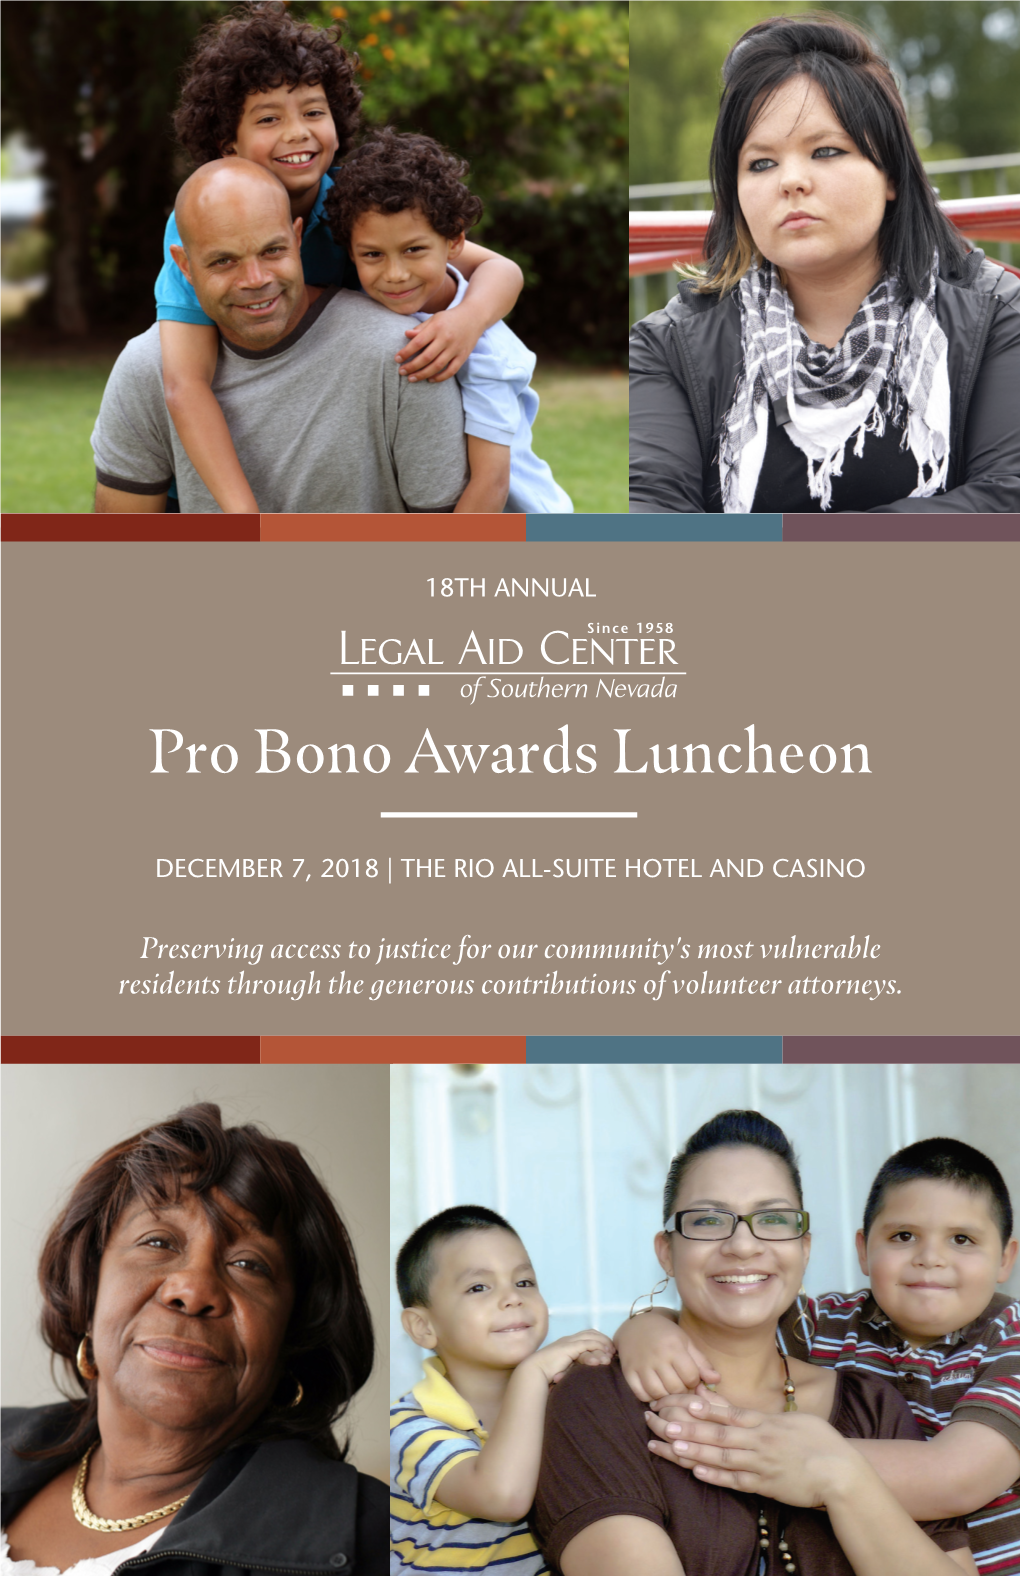 Pro Bono Awards Luncheon